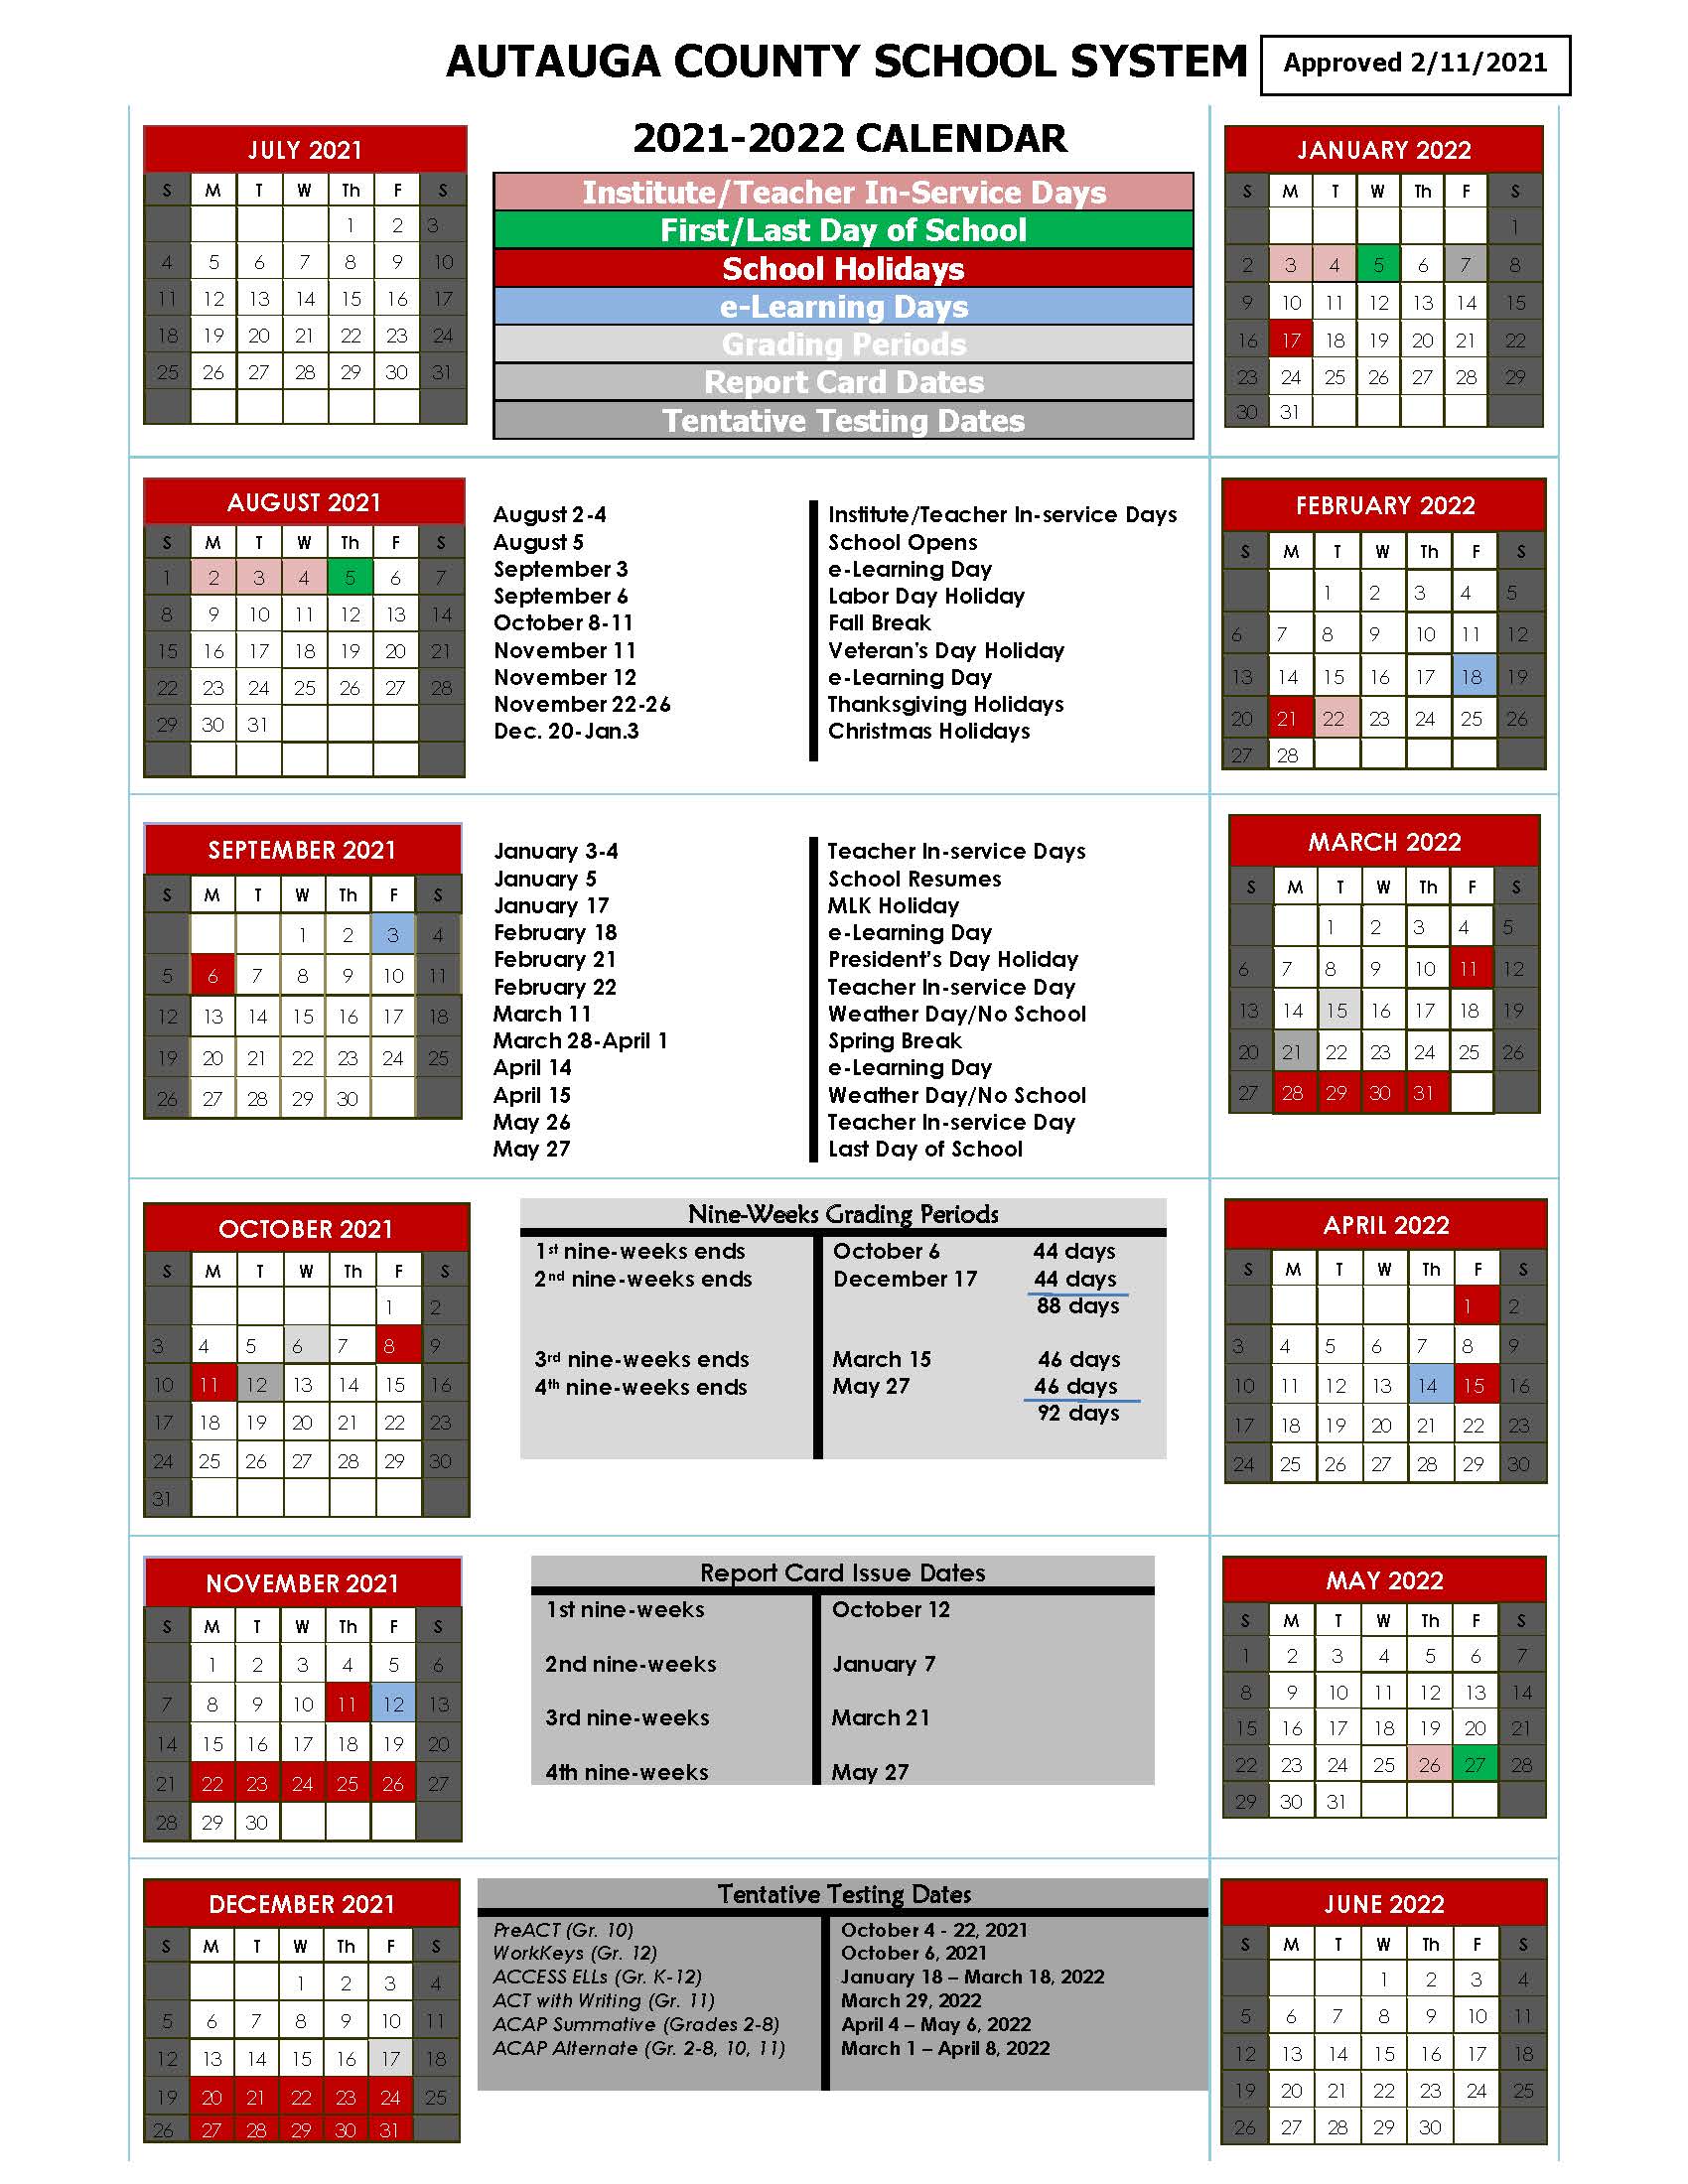 Pratt Academic Calendar Spring 2022 2021-22 School Calendar - Billingsley School